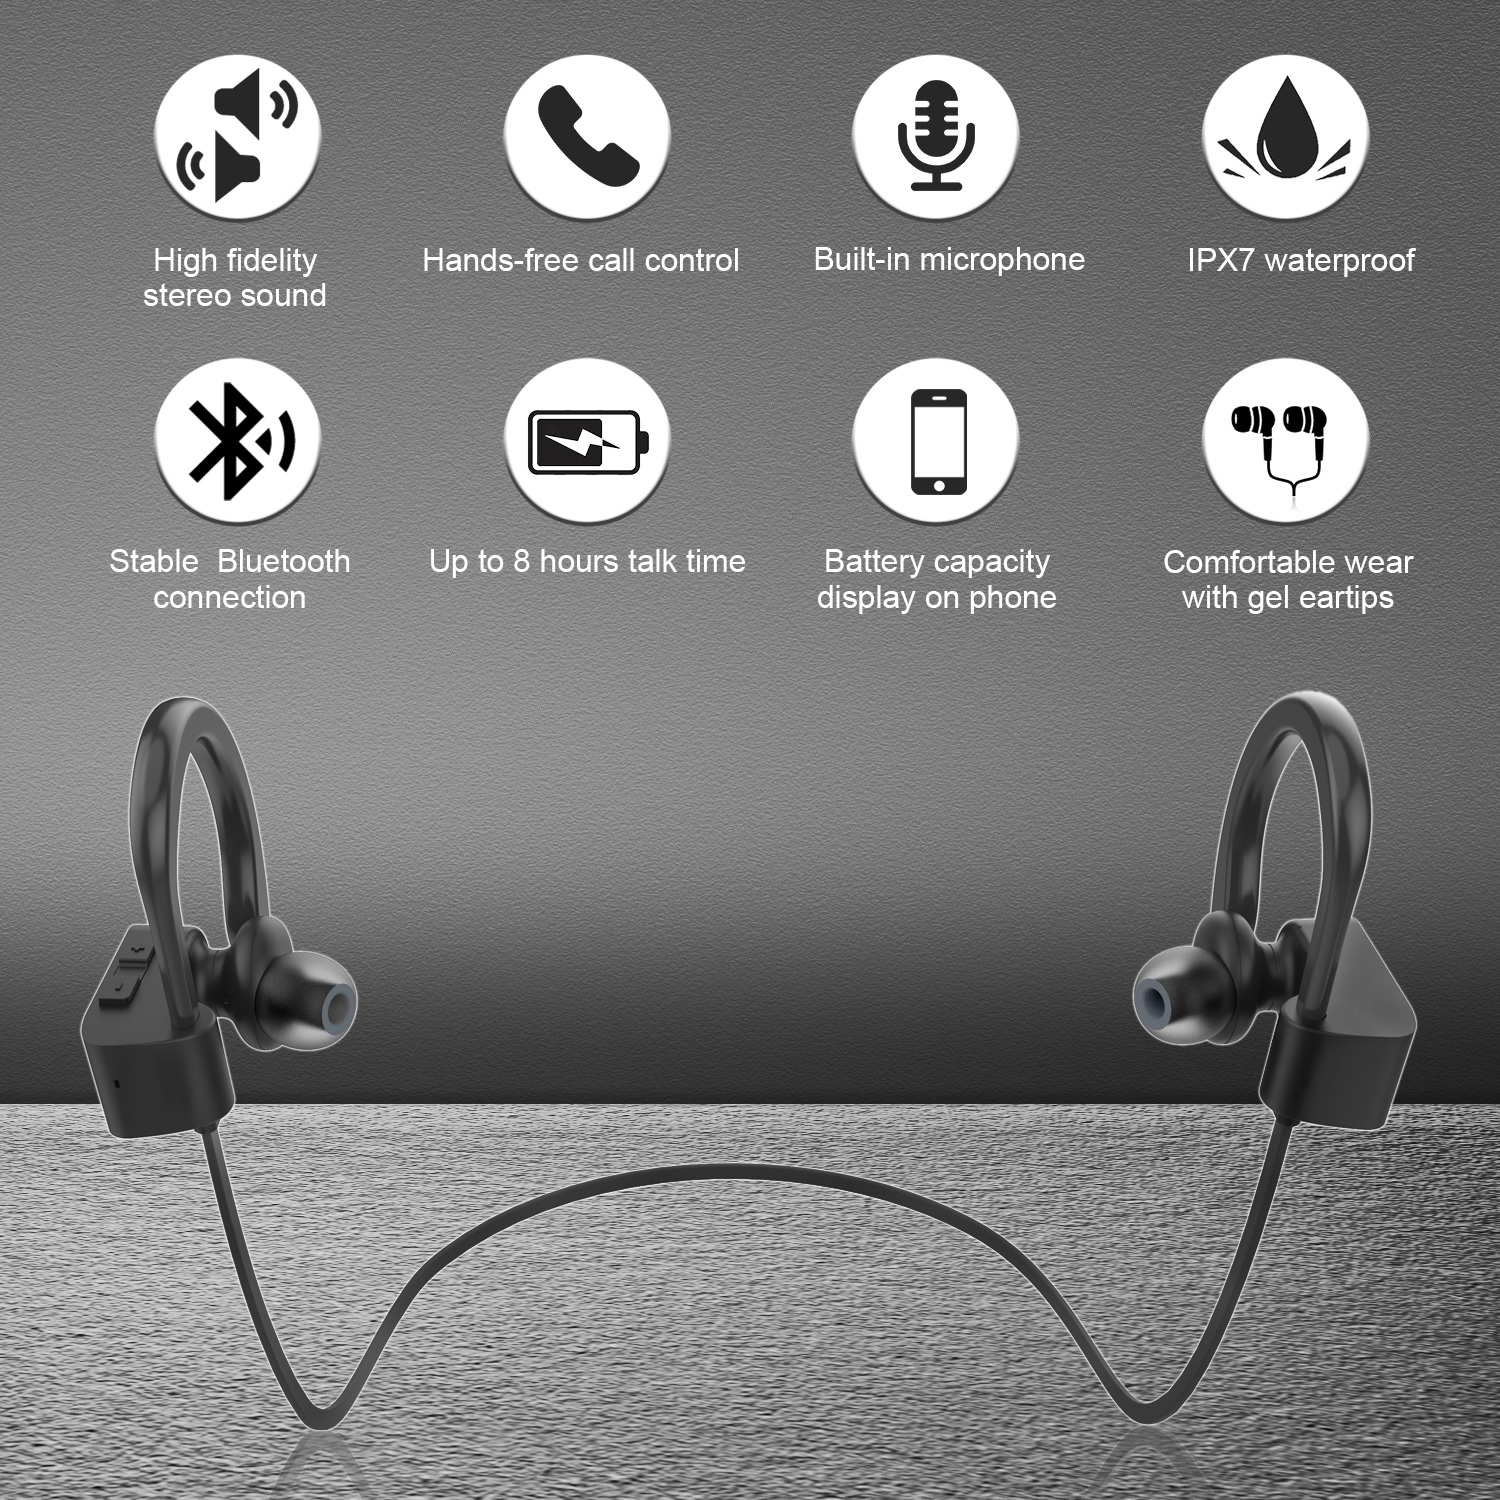 LETSCOM U8I Bluetooth Headphones V5.0 IPX7 Waterproof, HiFi Bass Stereo Sweatproof Earbuds - image 2 of 7